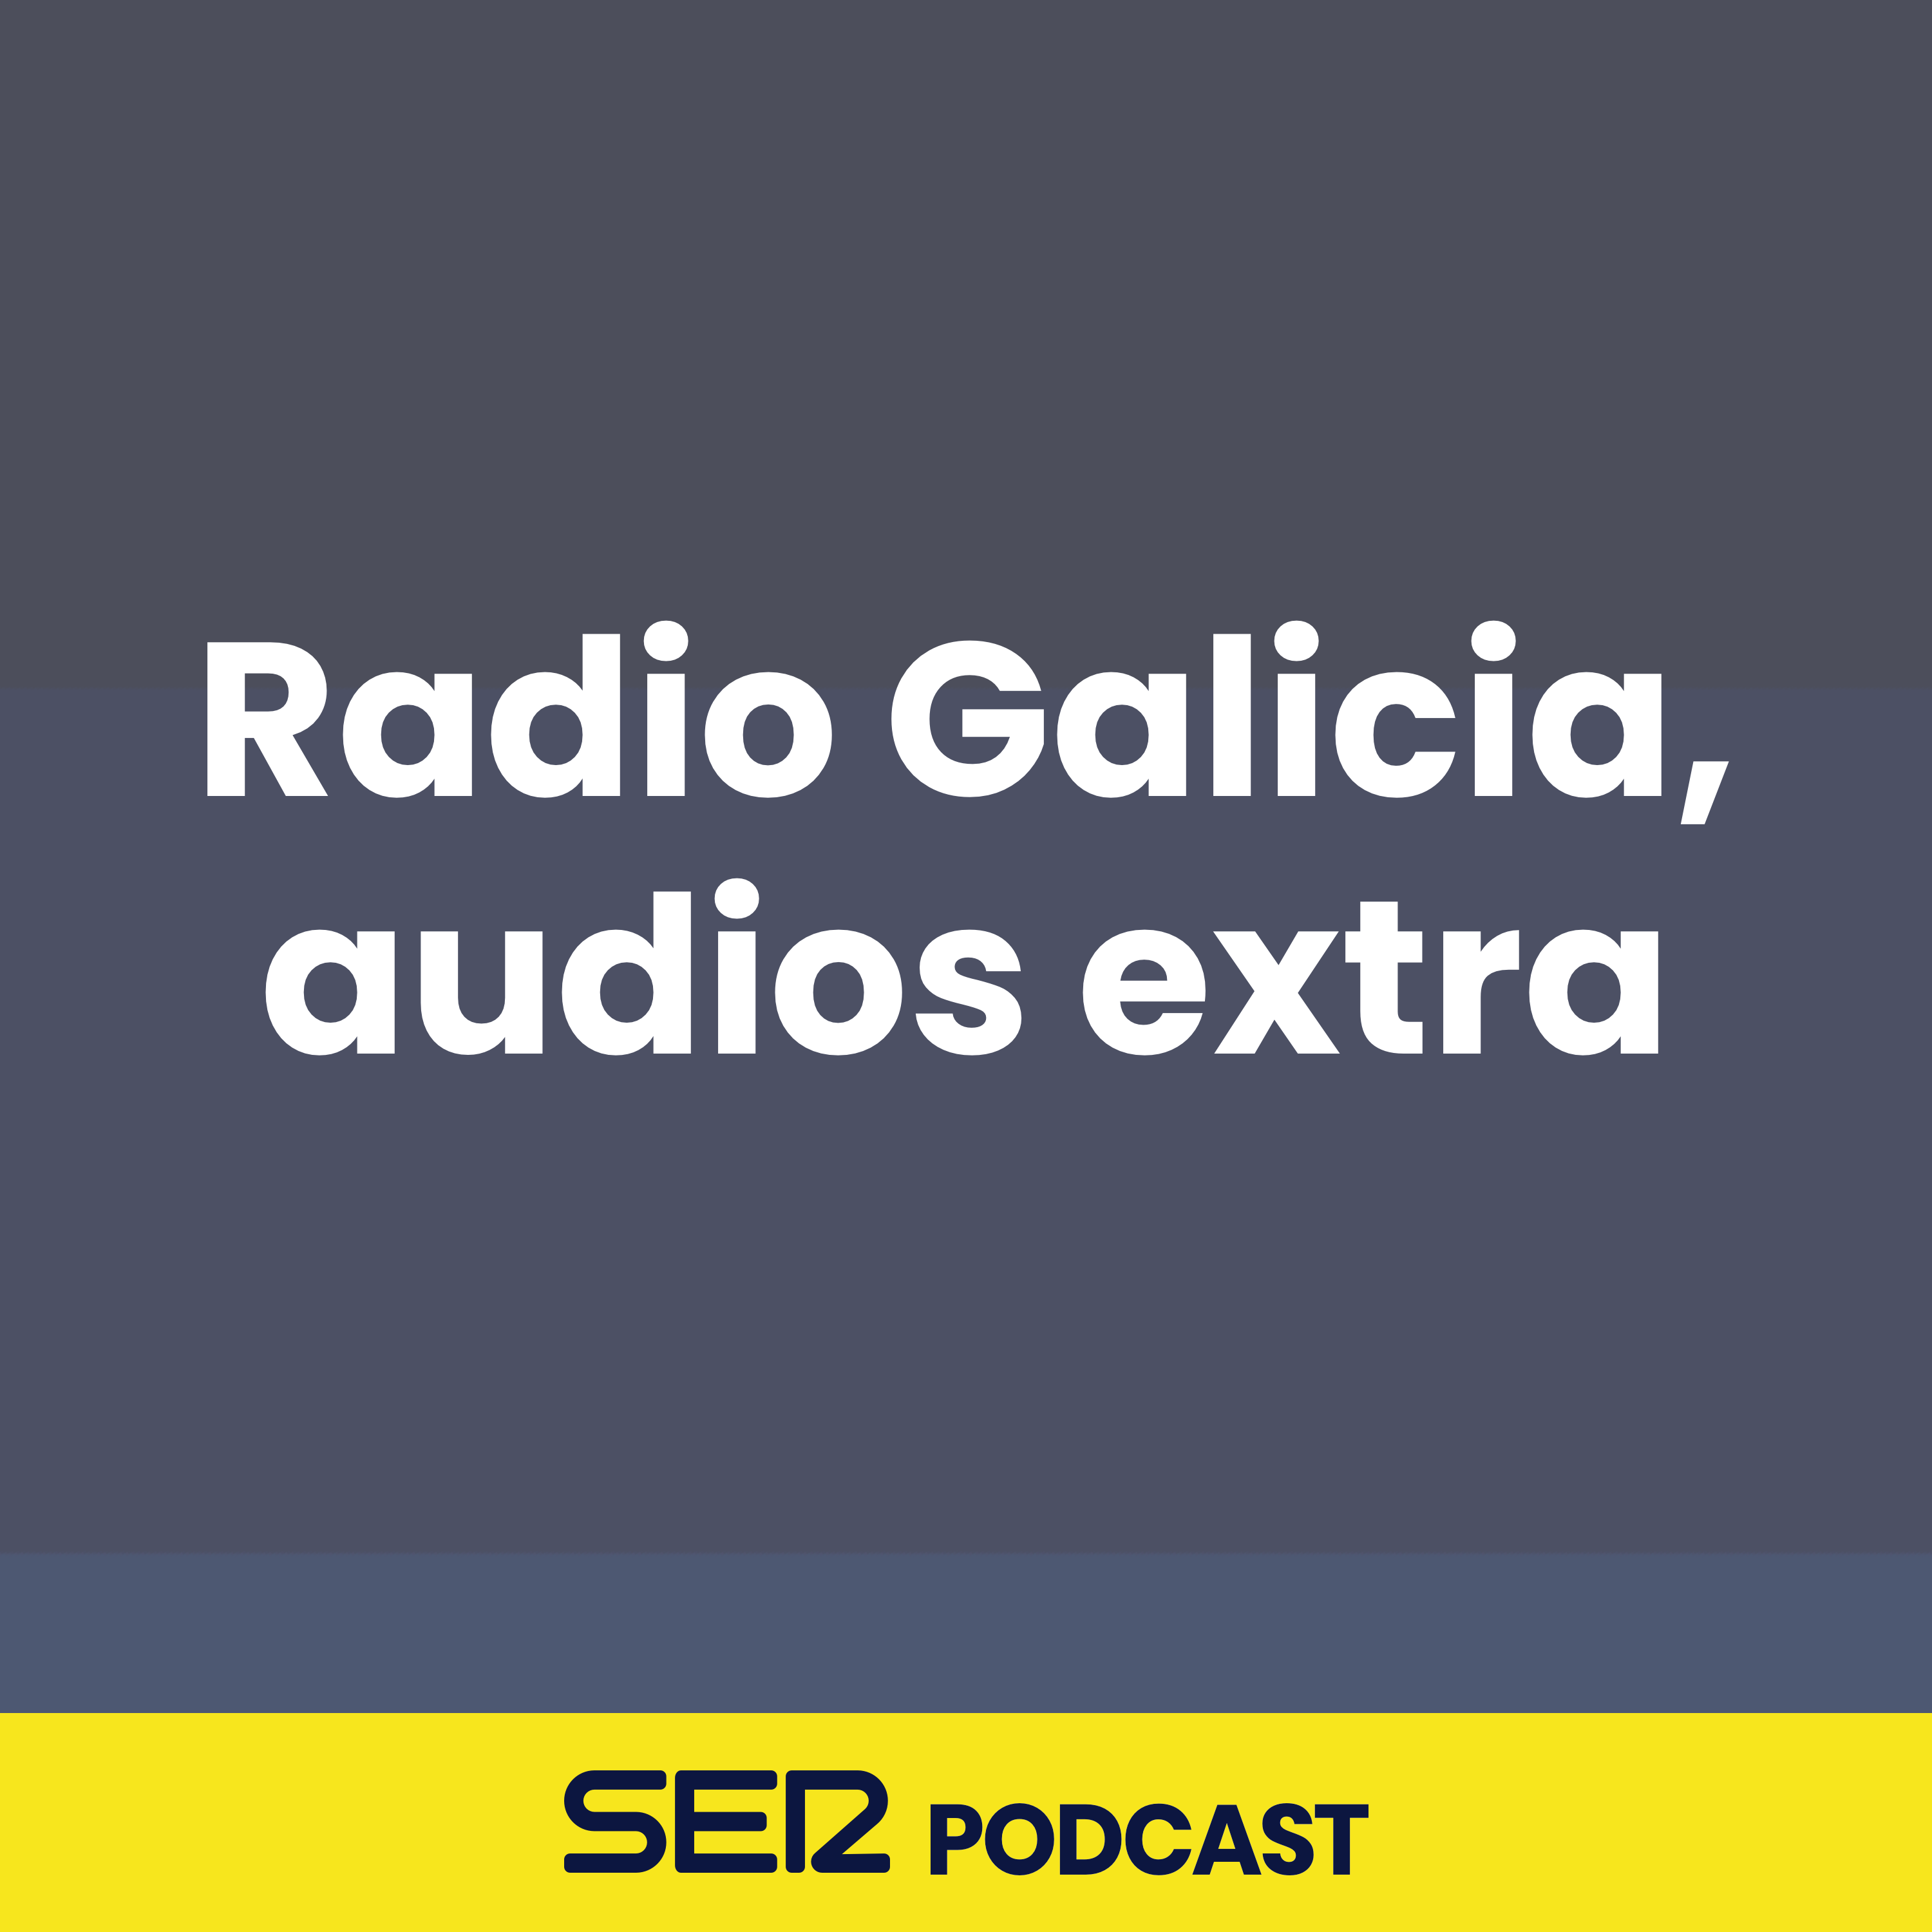 Radio Galicia, audios extra